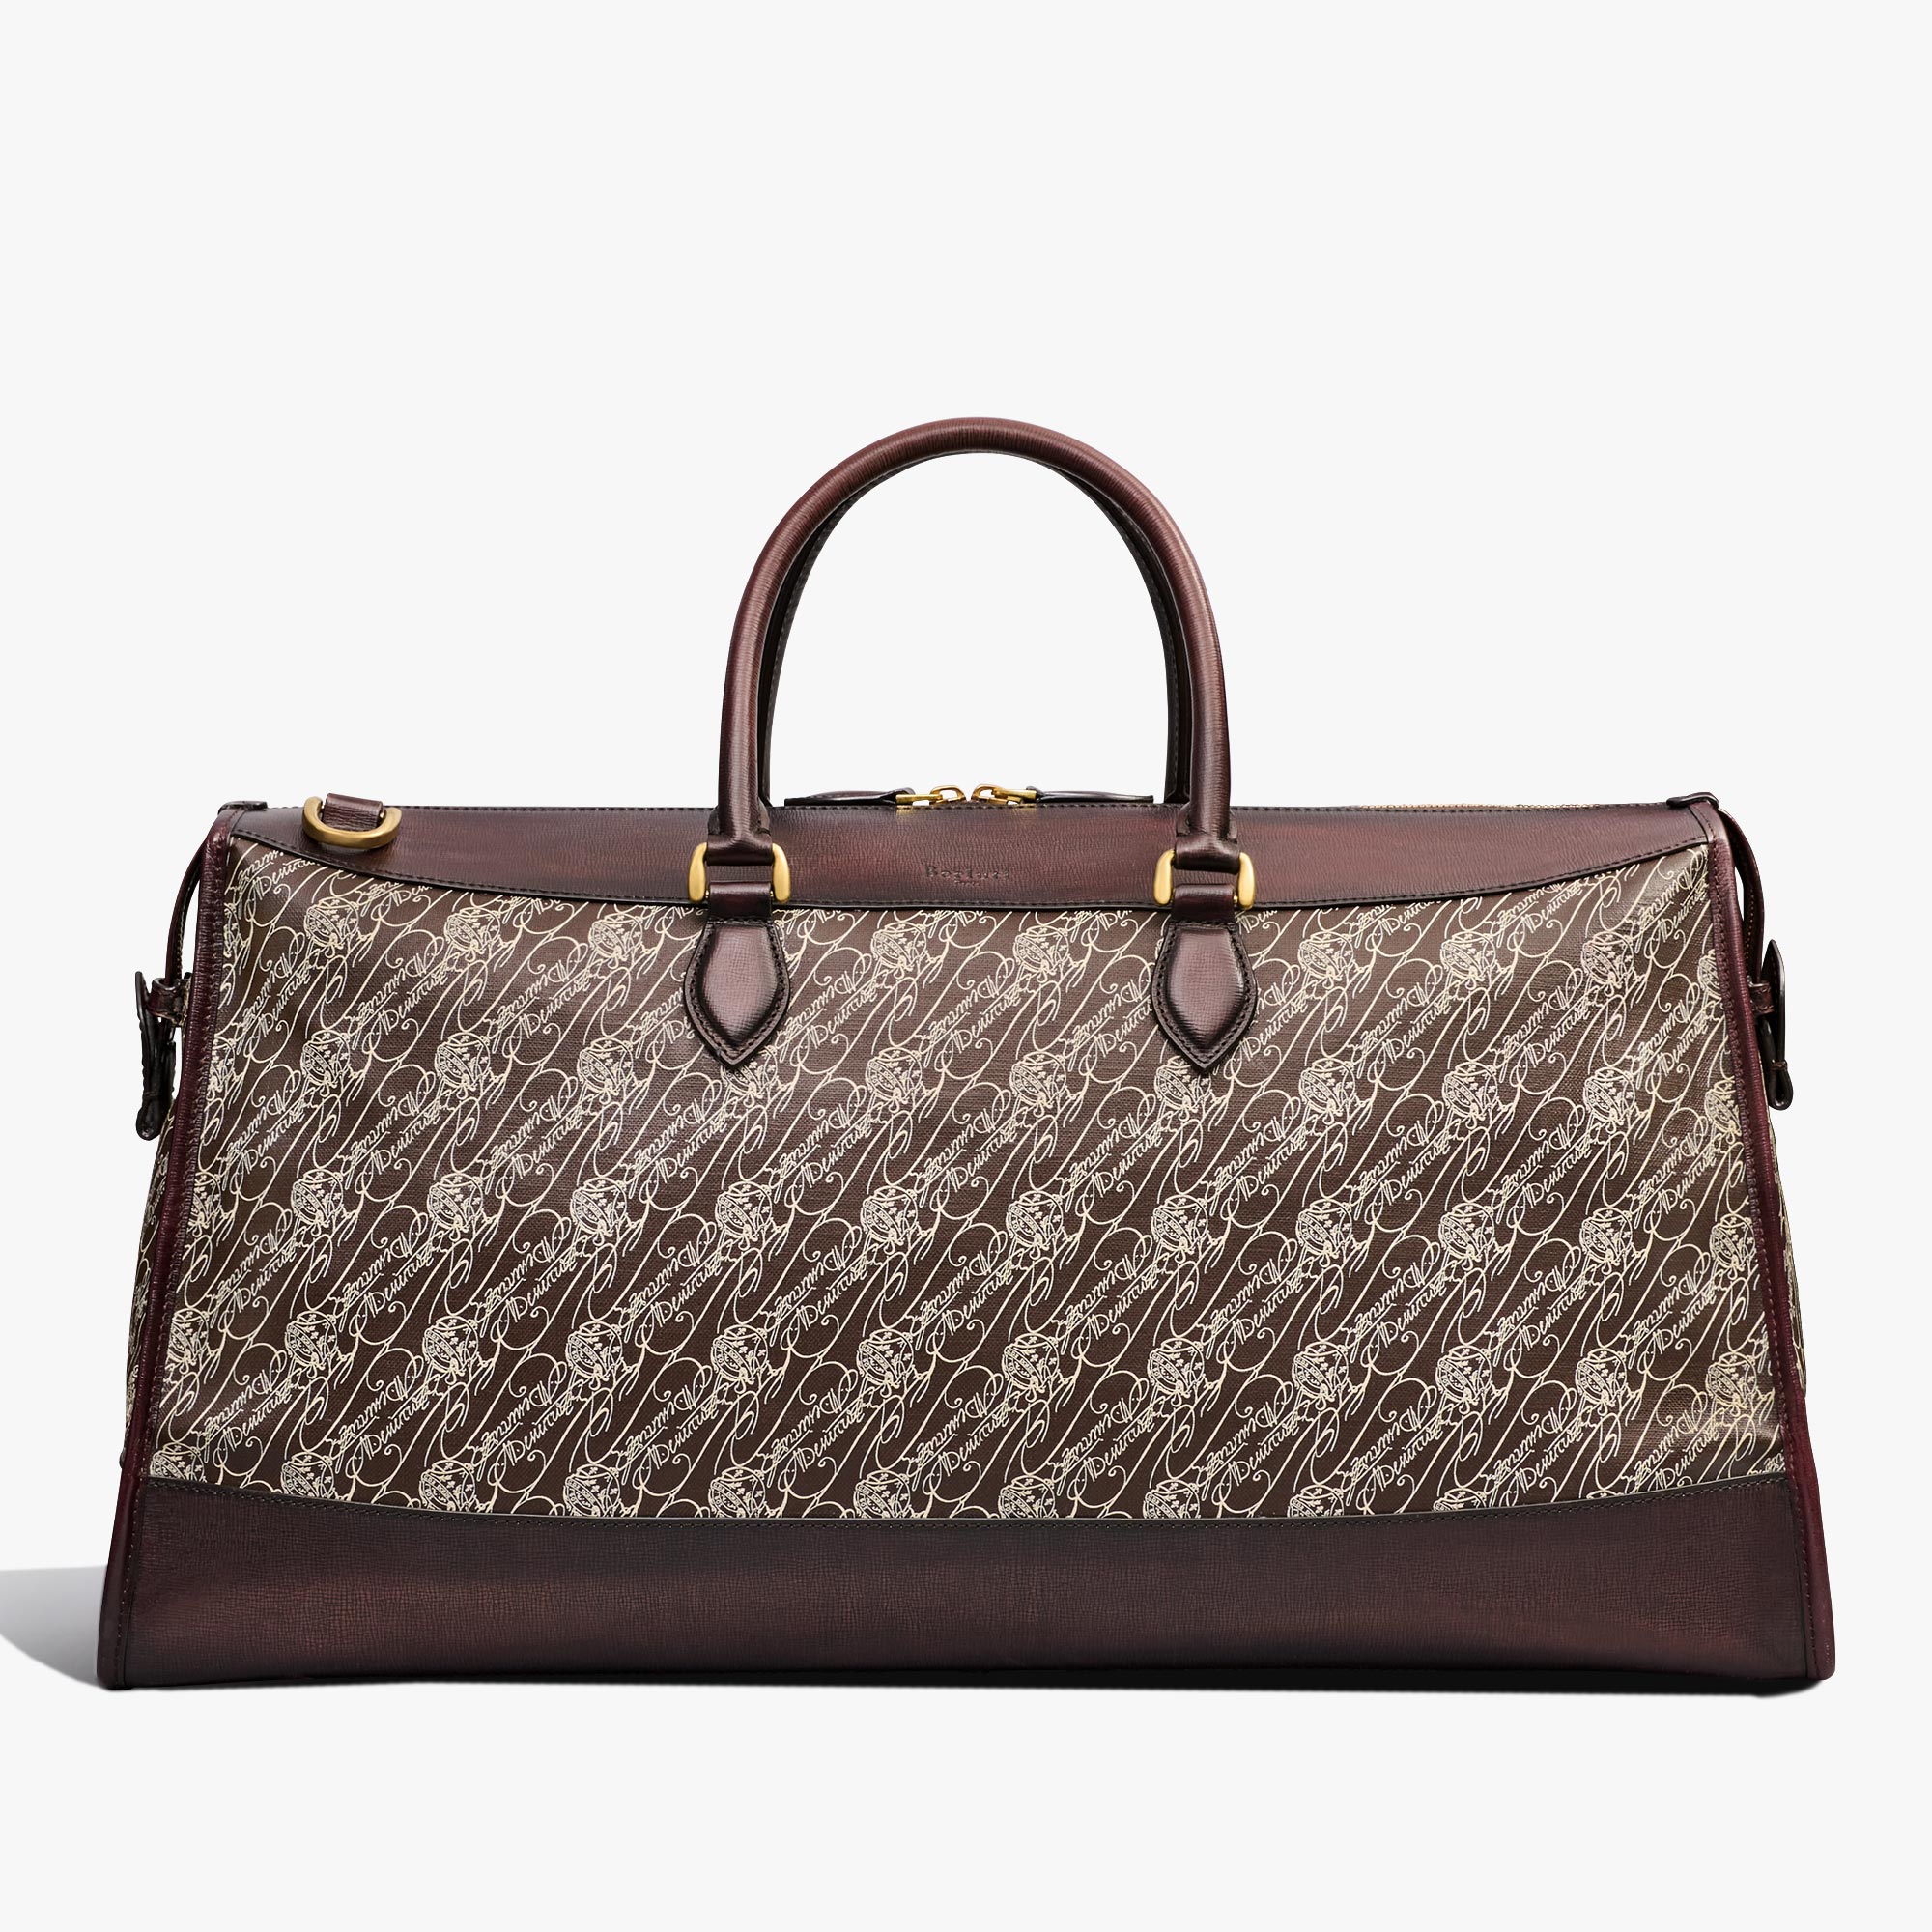 Buy Louis Vuitton Duffle Bag Online In India -  India